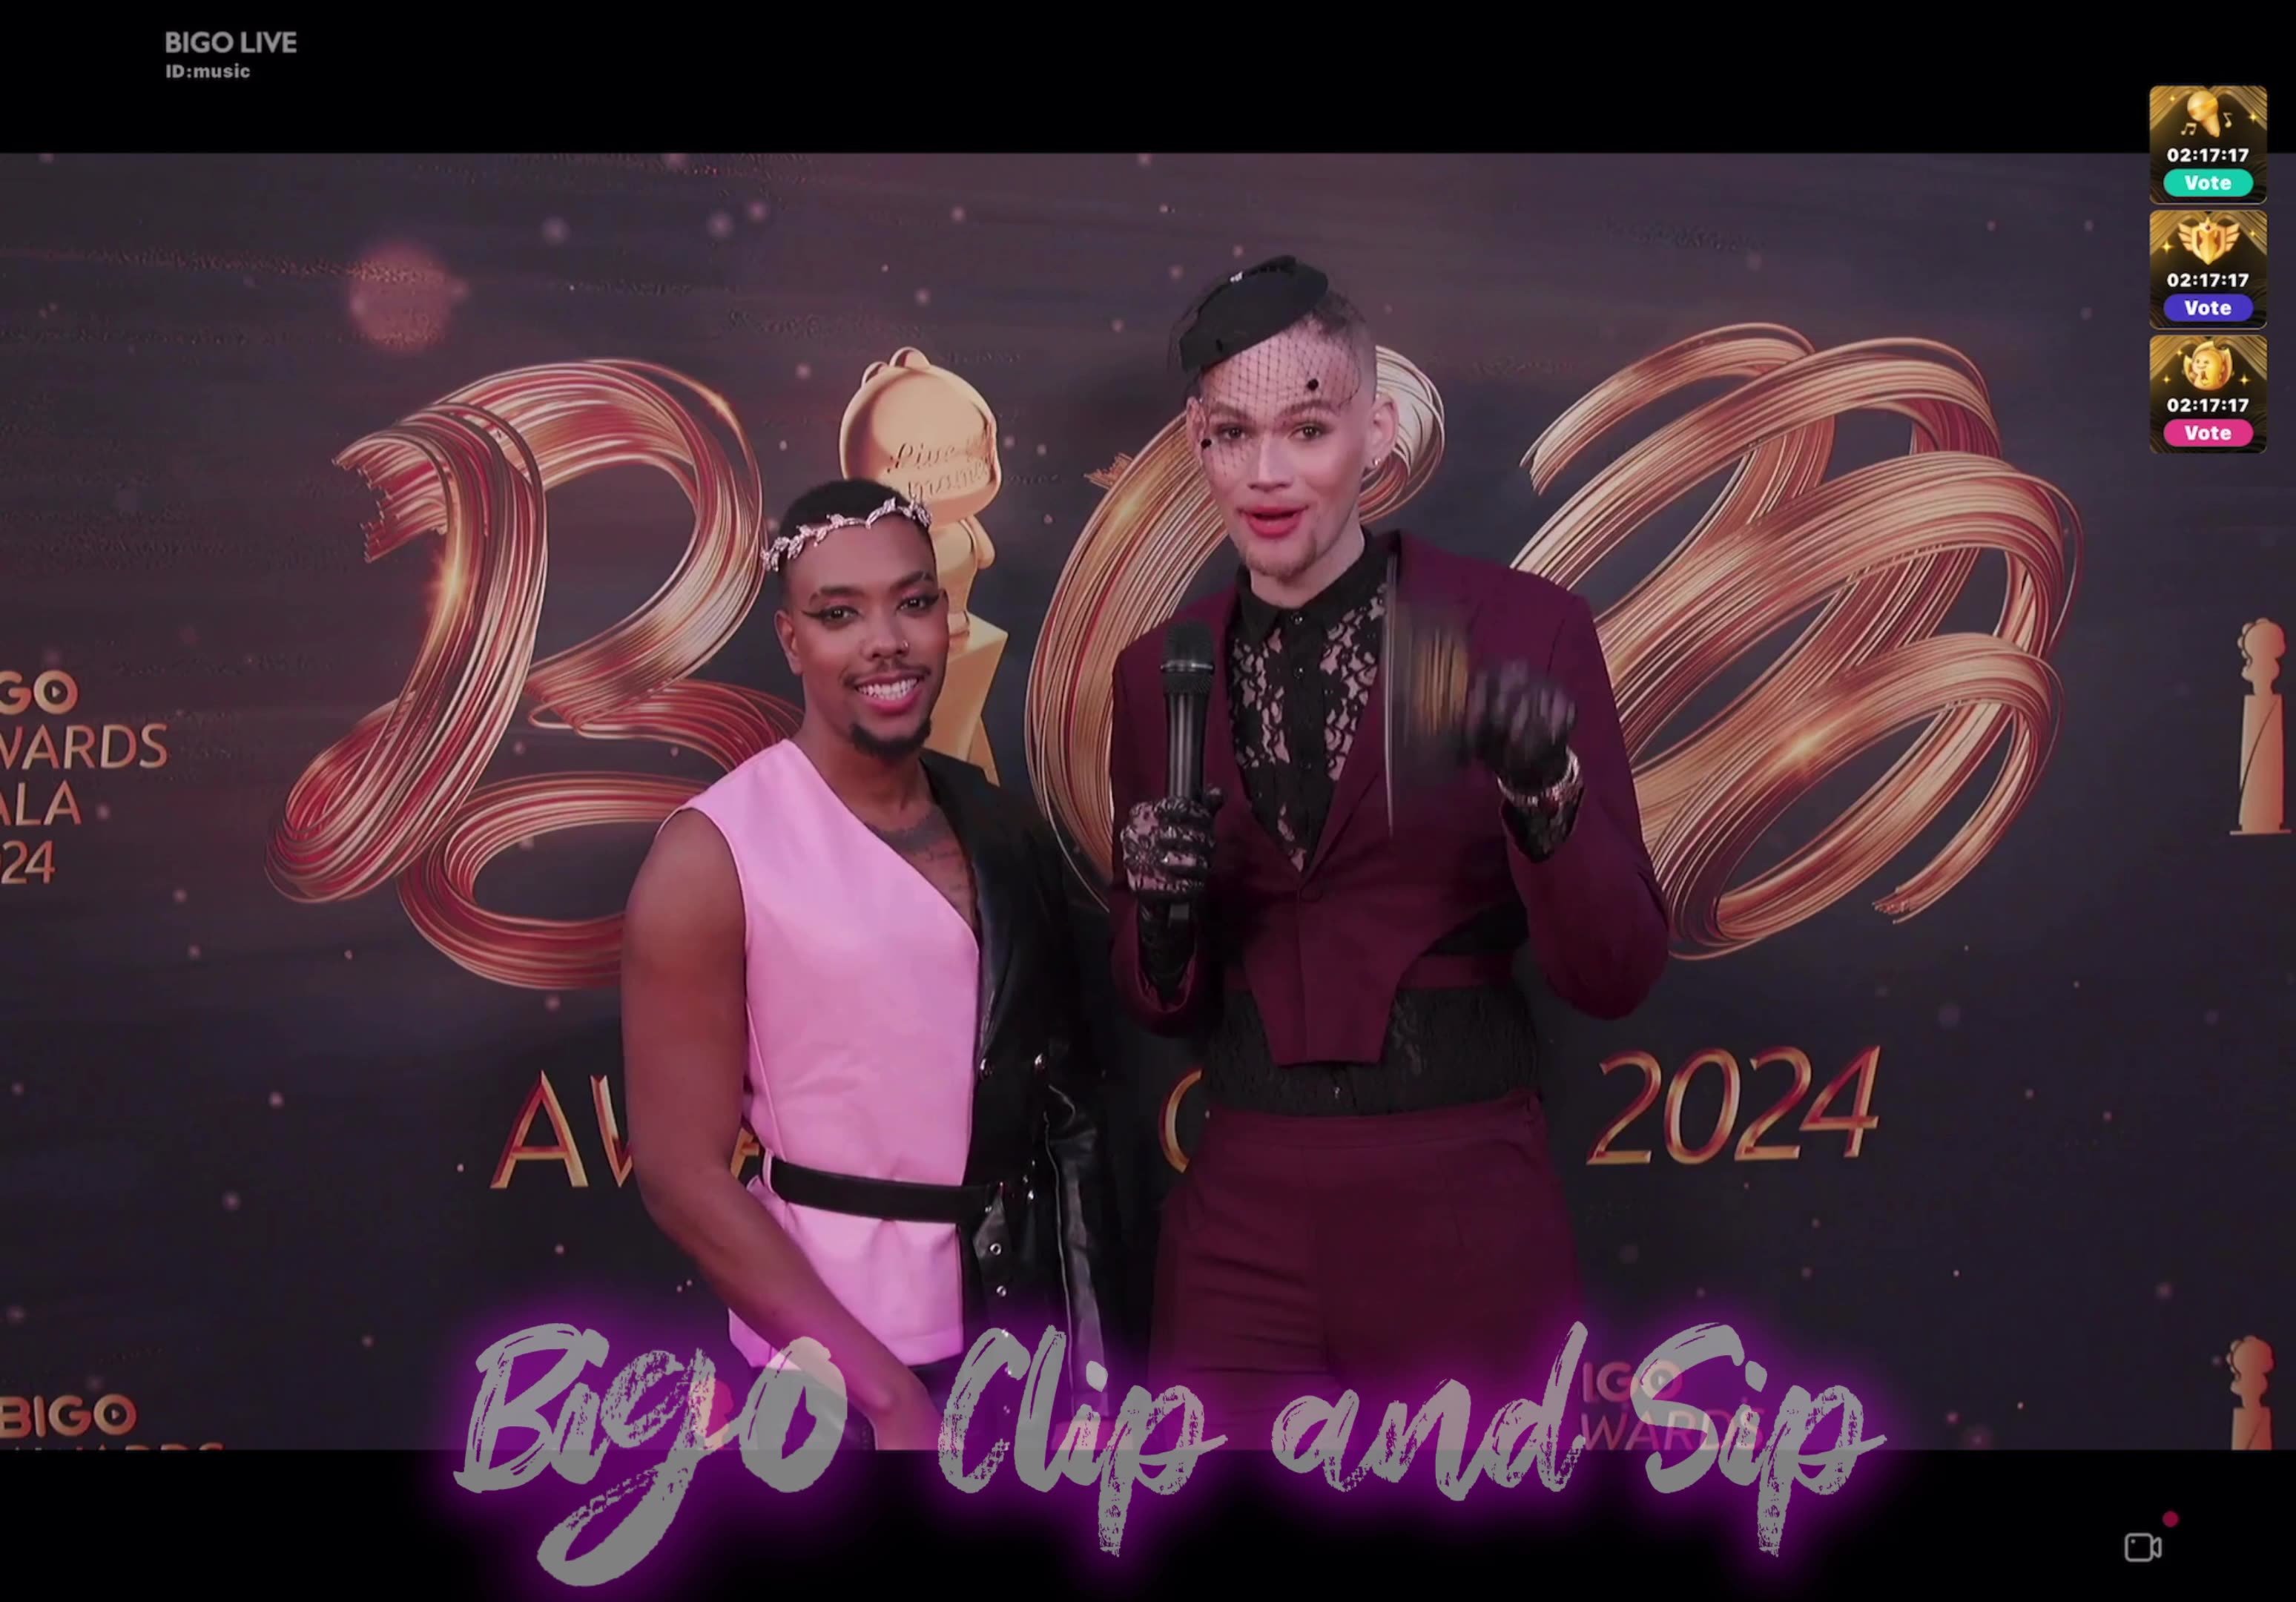 Bigo Clip and Sip Bigo Gala Awards 2024 ft God Zeus 1/16/24 bigoclipandsip